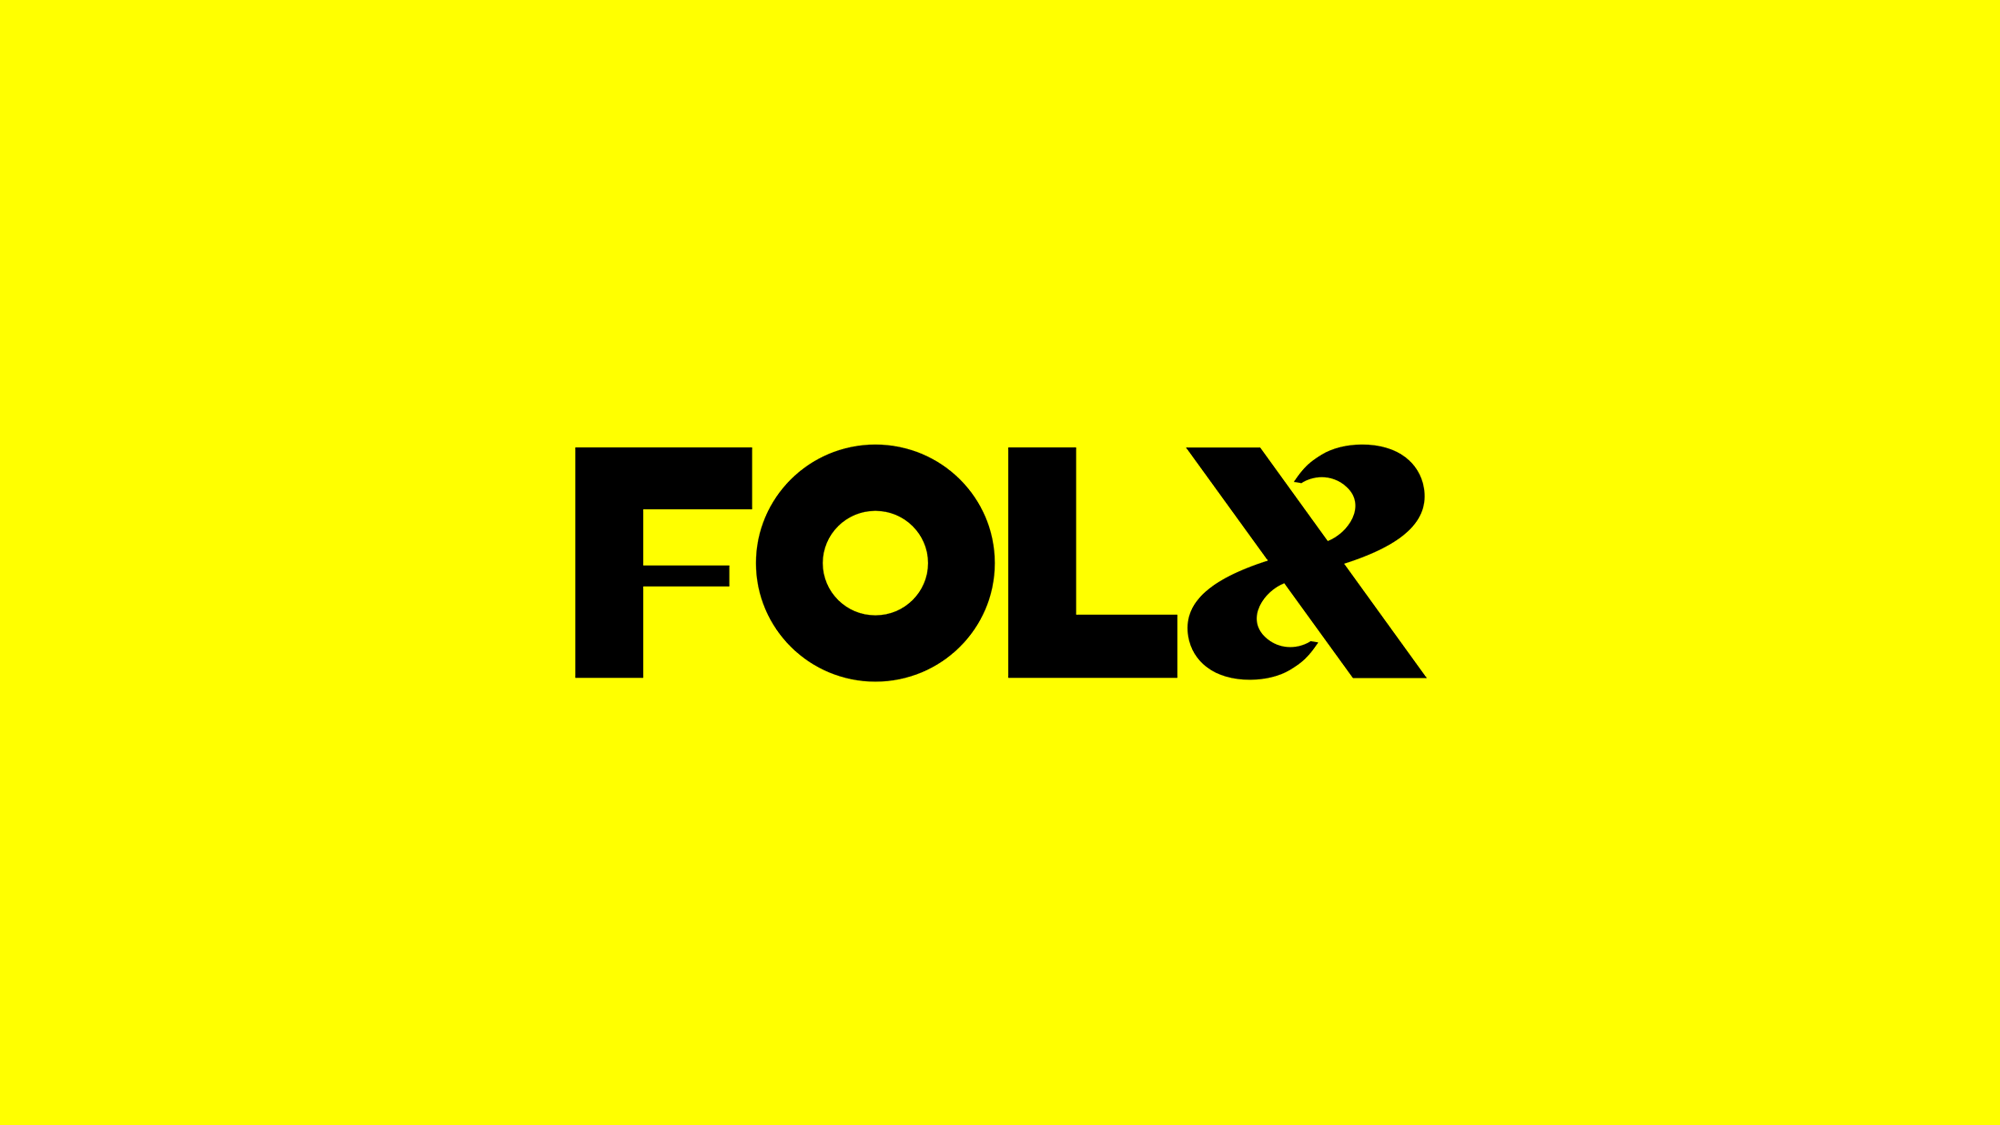 folx health review